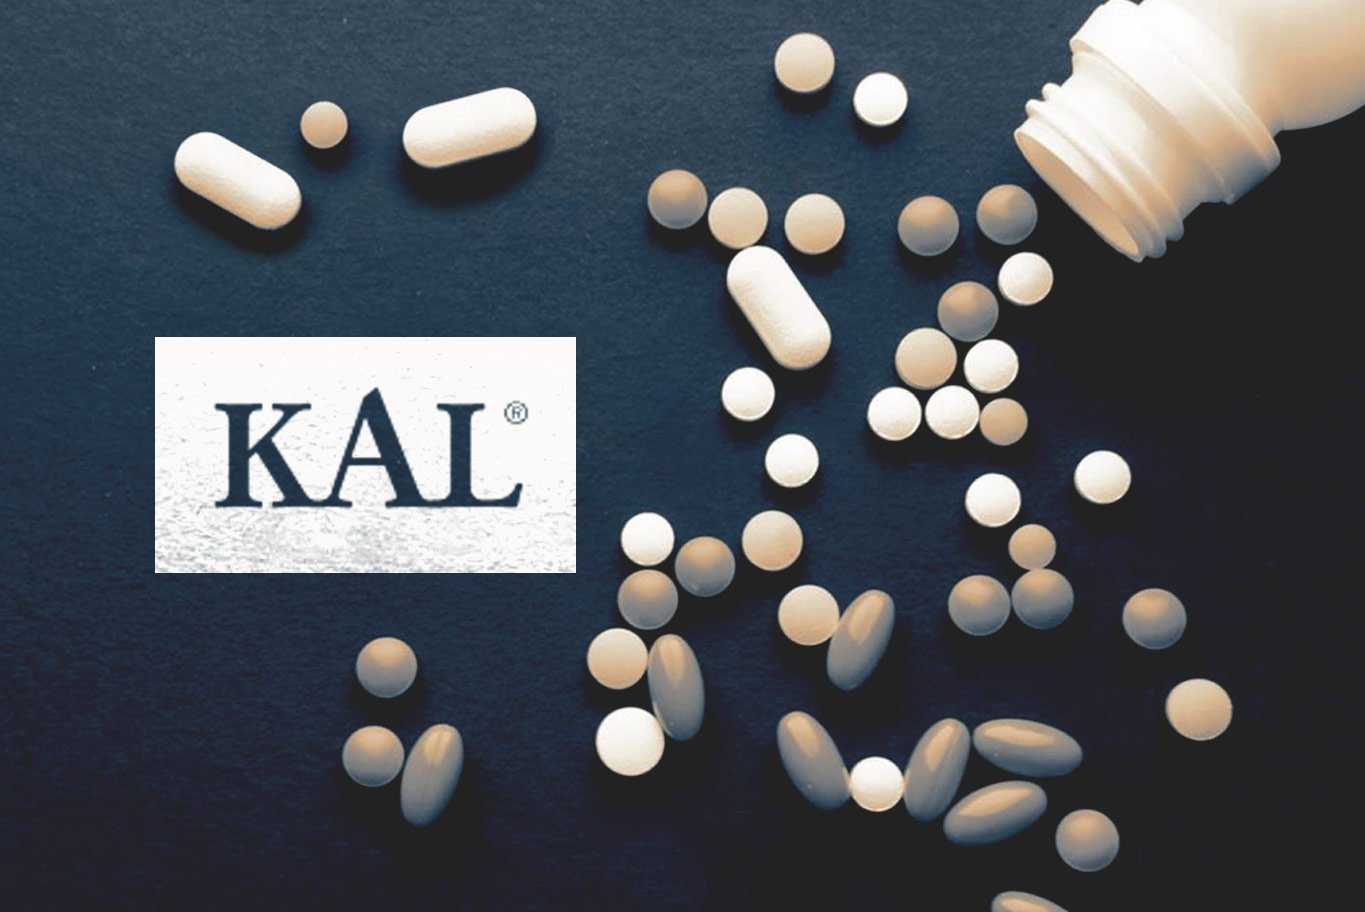 kal supplements logo on background optimus medica